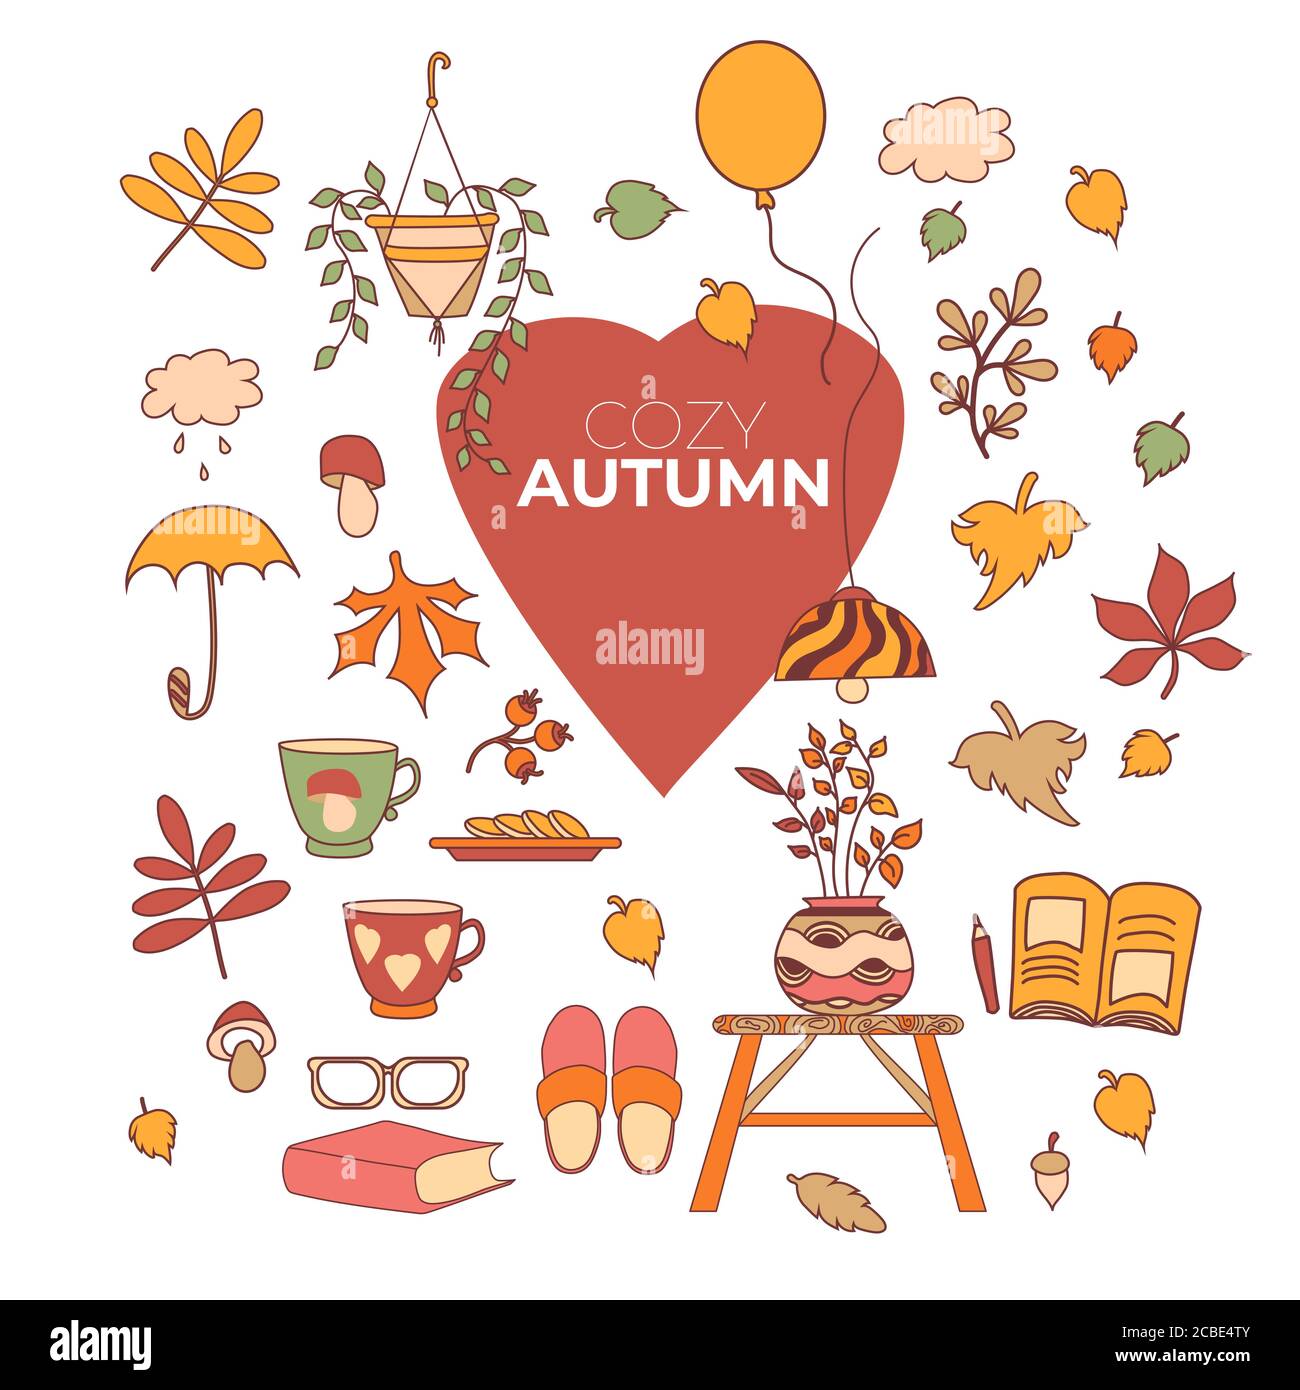 The cosy autumnal crossword